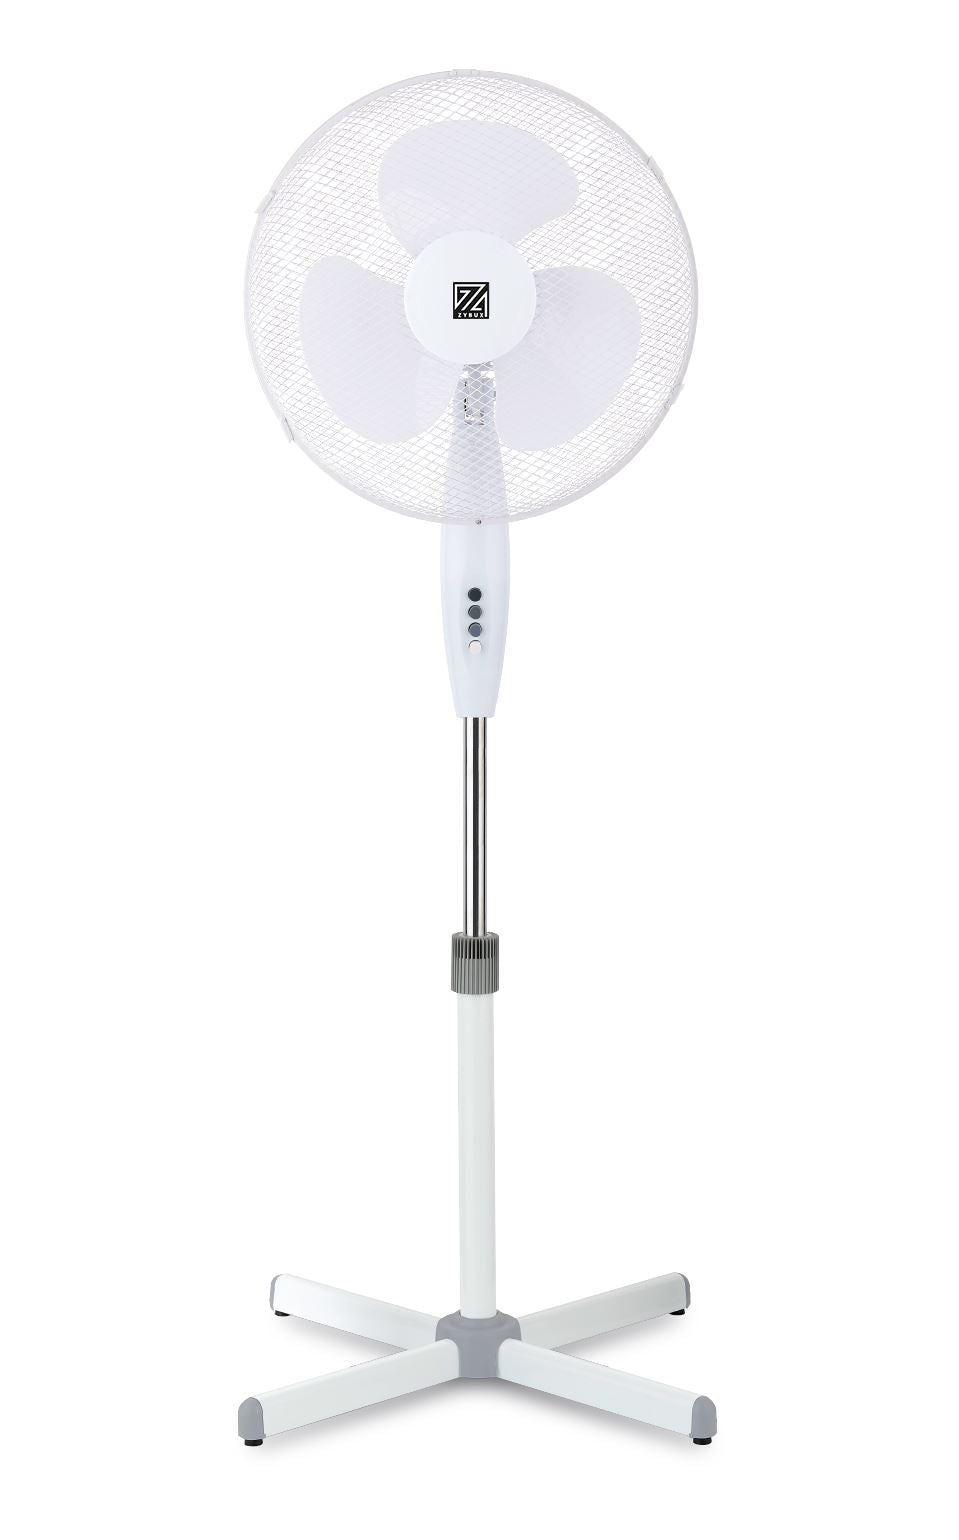 ZYBUX - 16 inch Oscillating Fan - ZYBUX